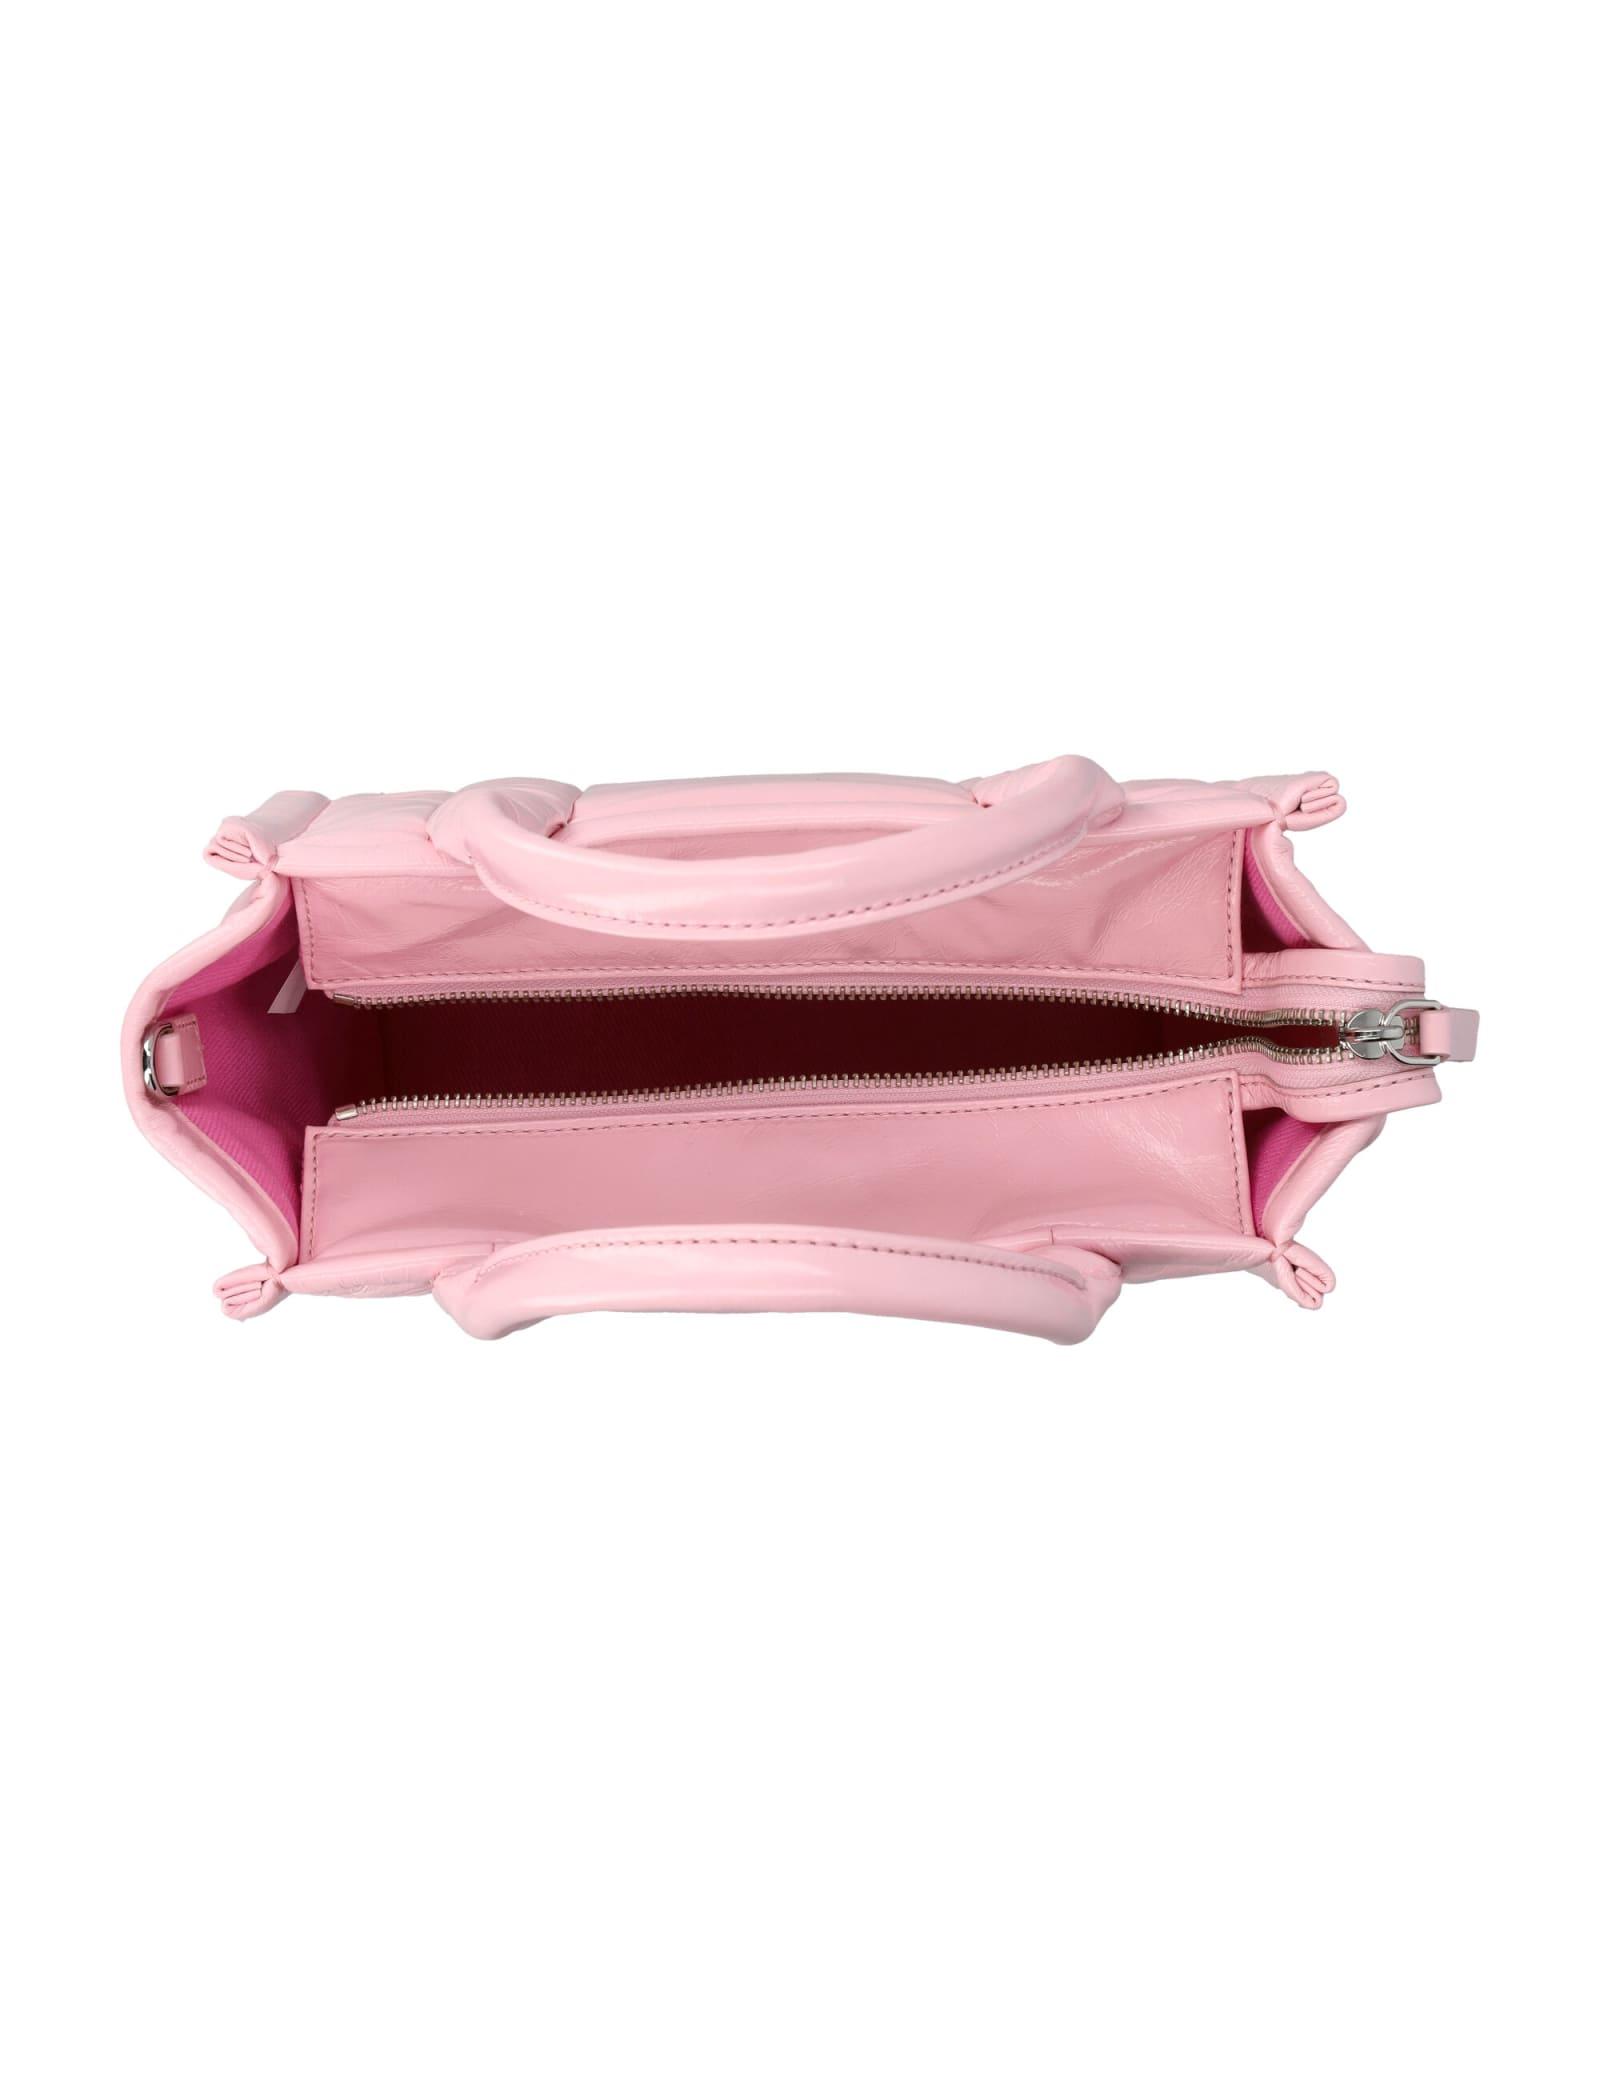 Marc Jacobs The Shiny Crinkle mini pink tote bag